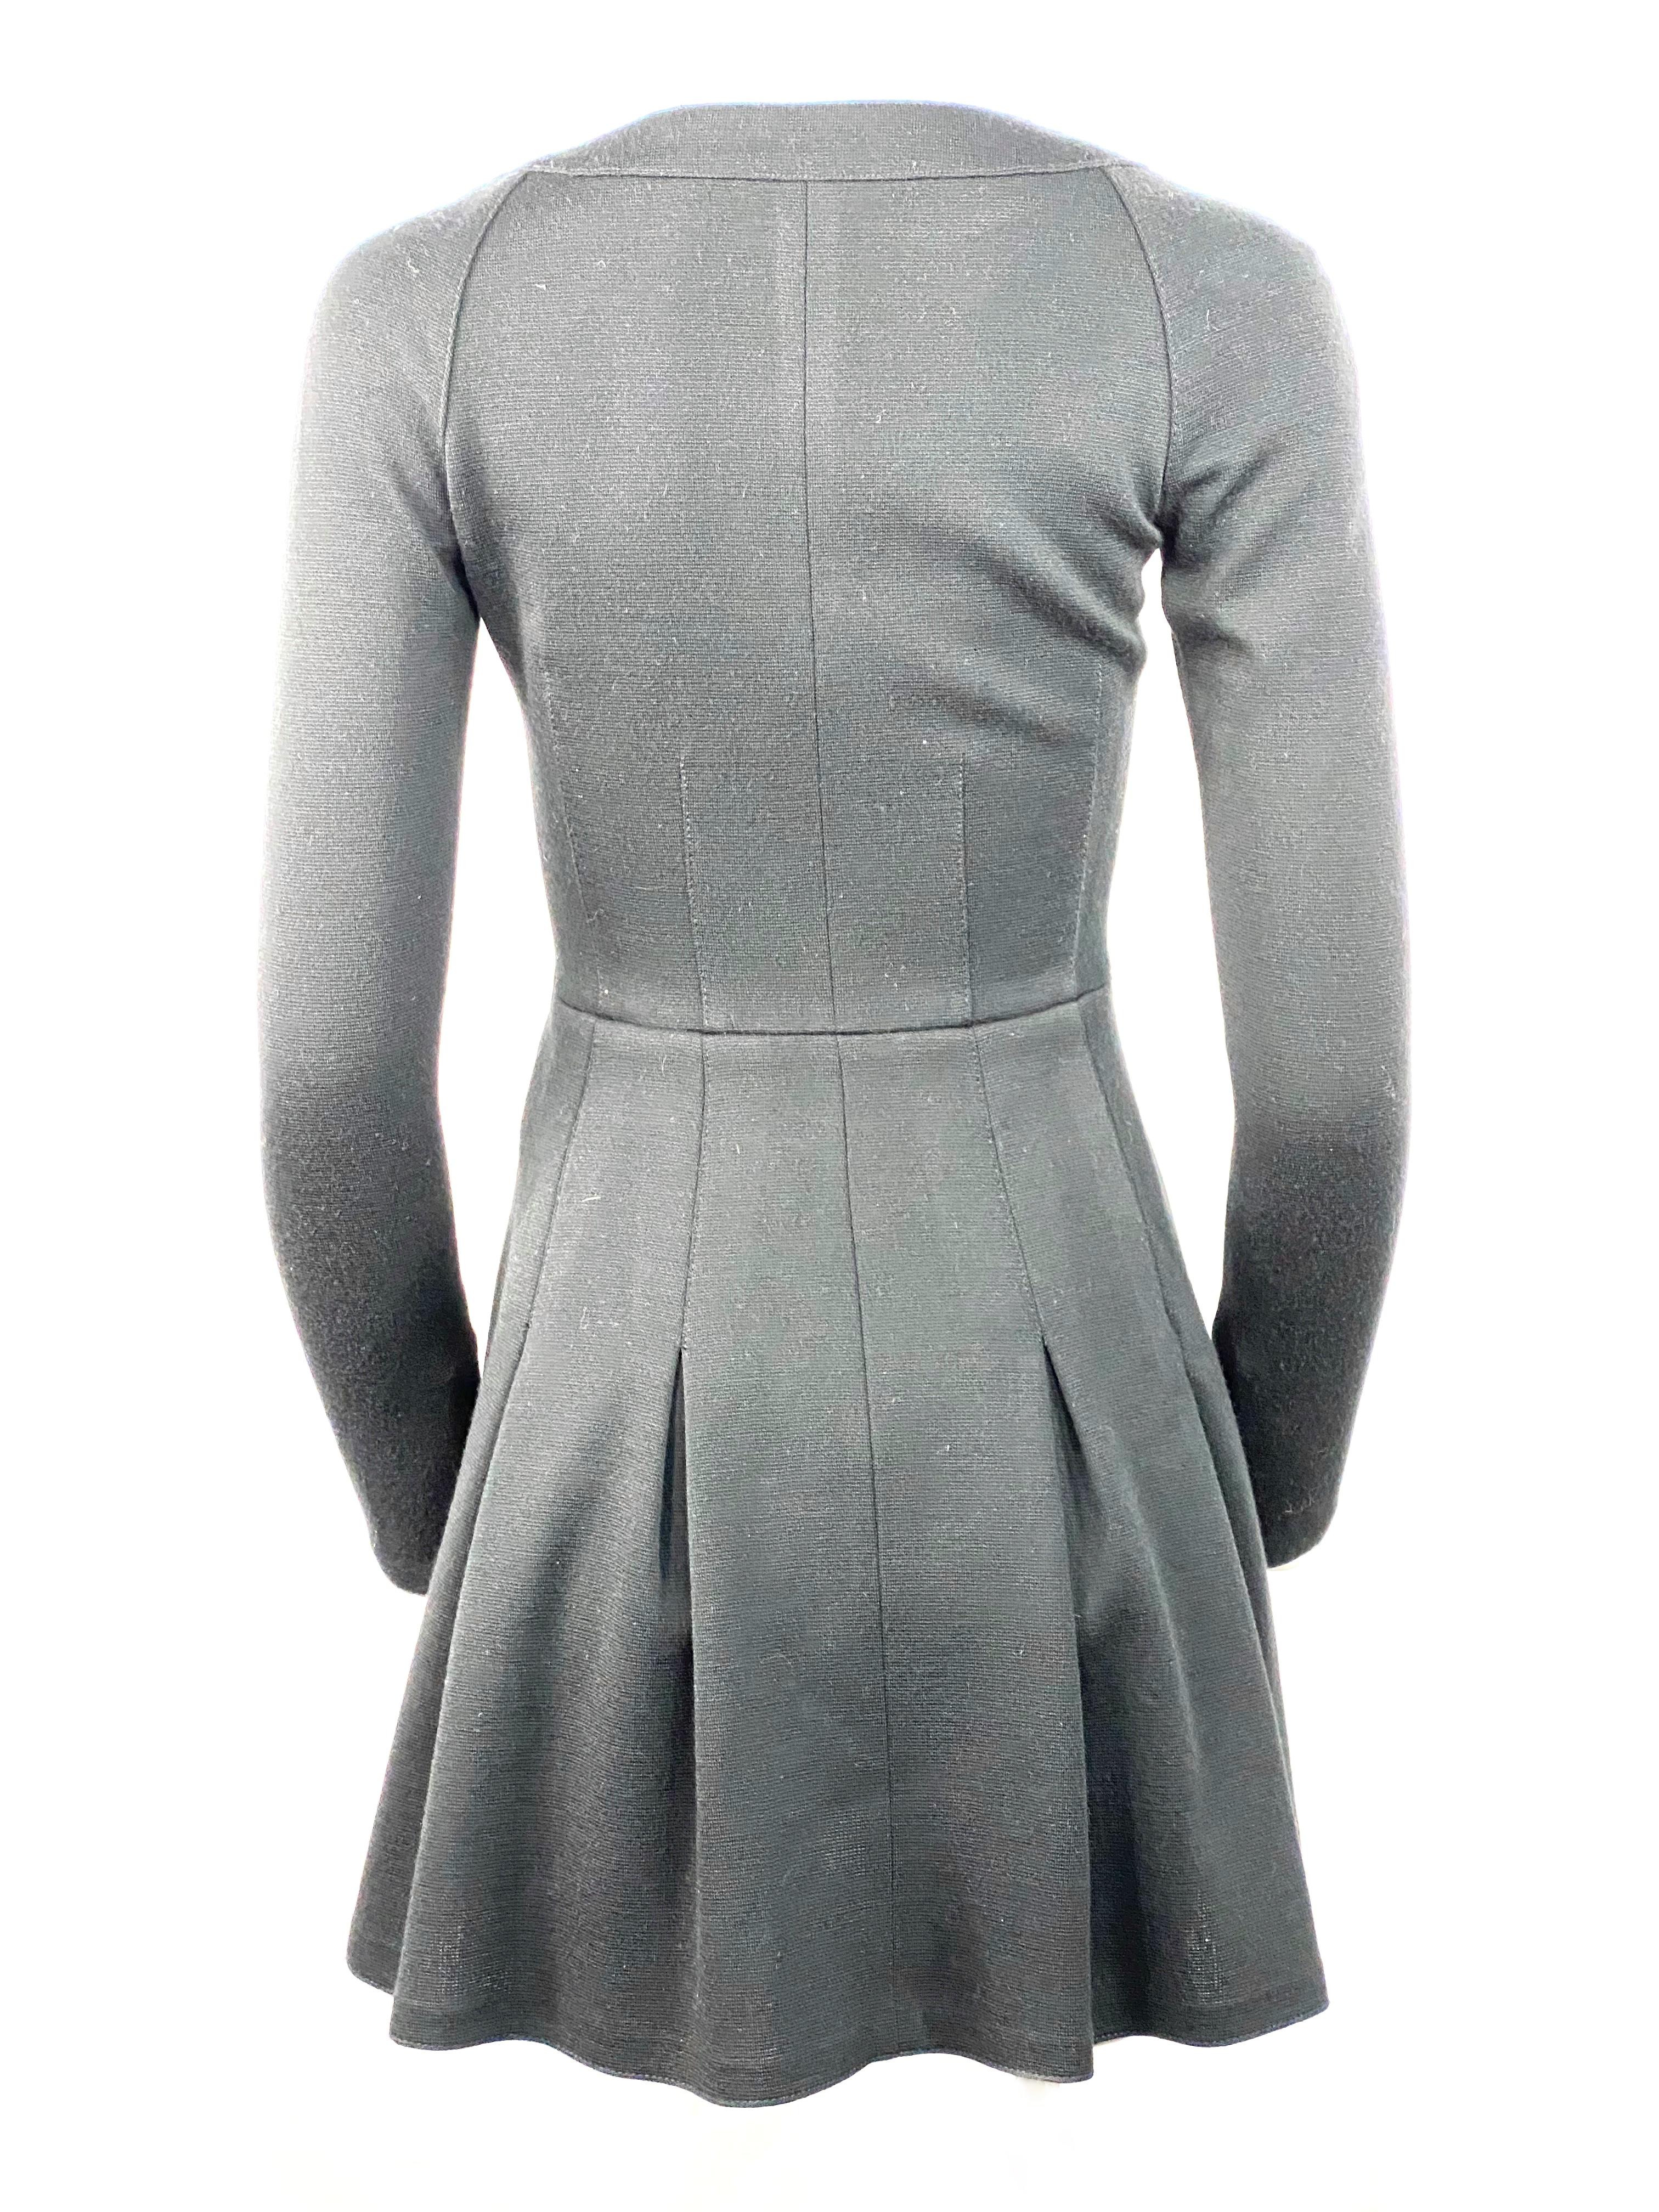 Proenza Schouler Black Wool Mini Coat Dress w/ Buttons Size 4 For Sale 1